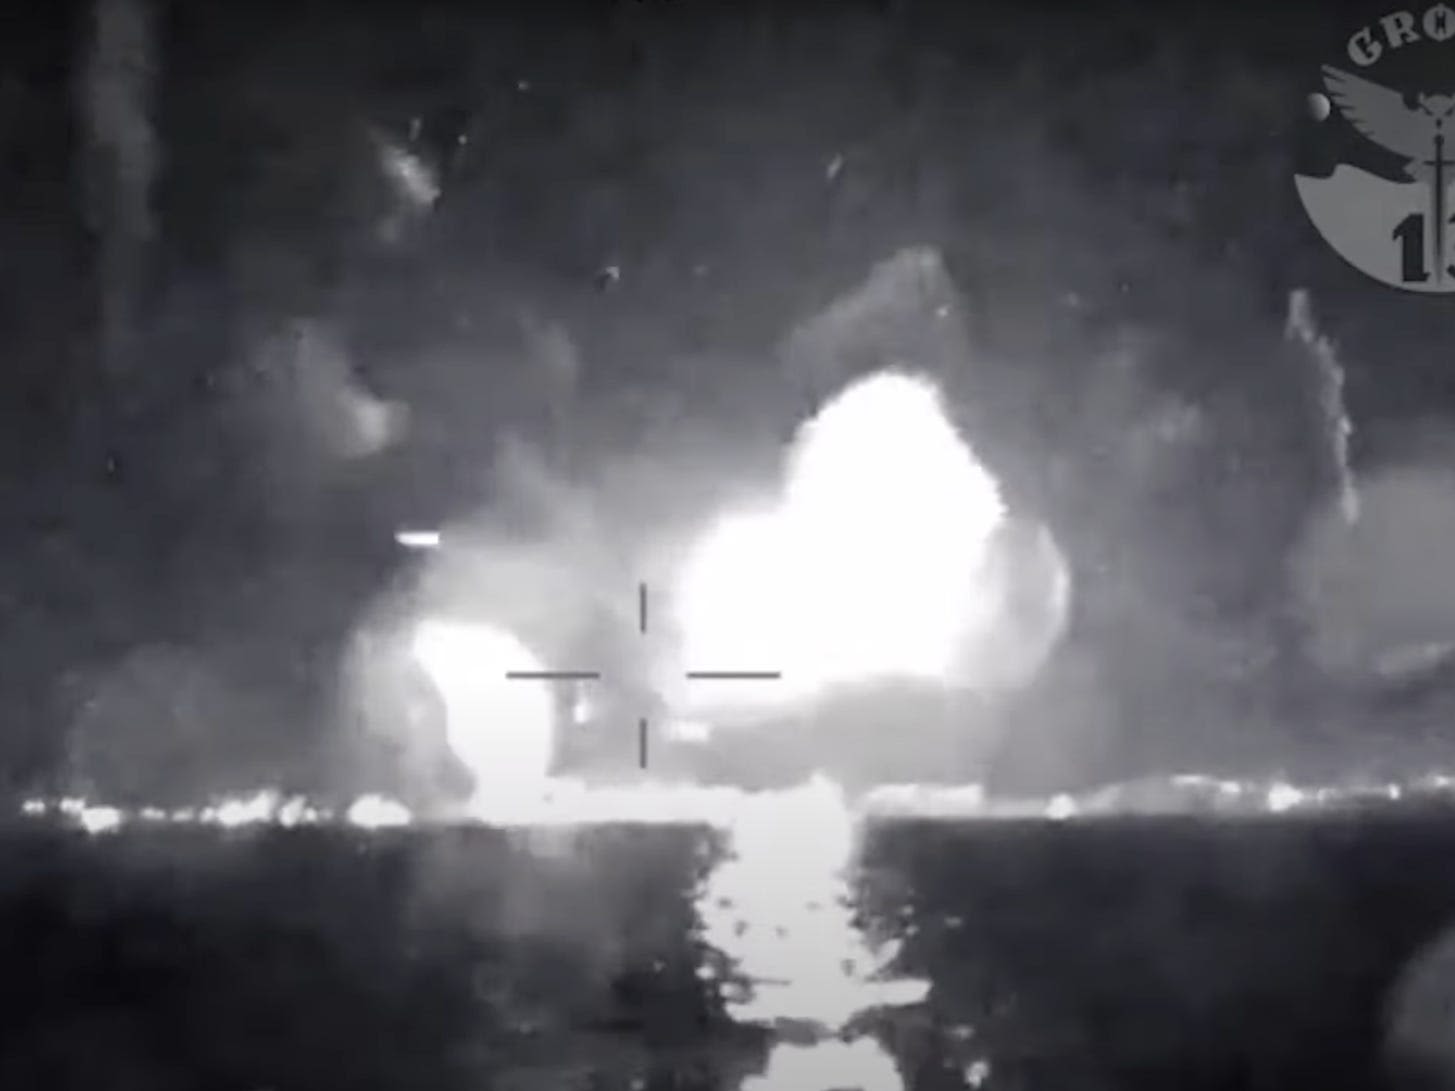 Video shows Ukrainian sea drones striking 2 ships, as Ukraine continues to harass Russia's Black Sea Fleet